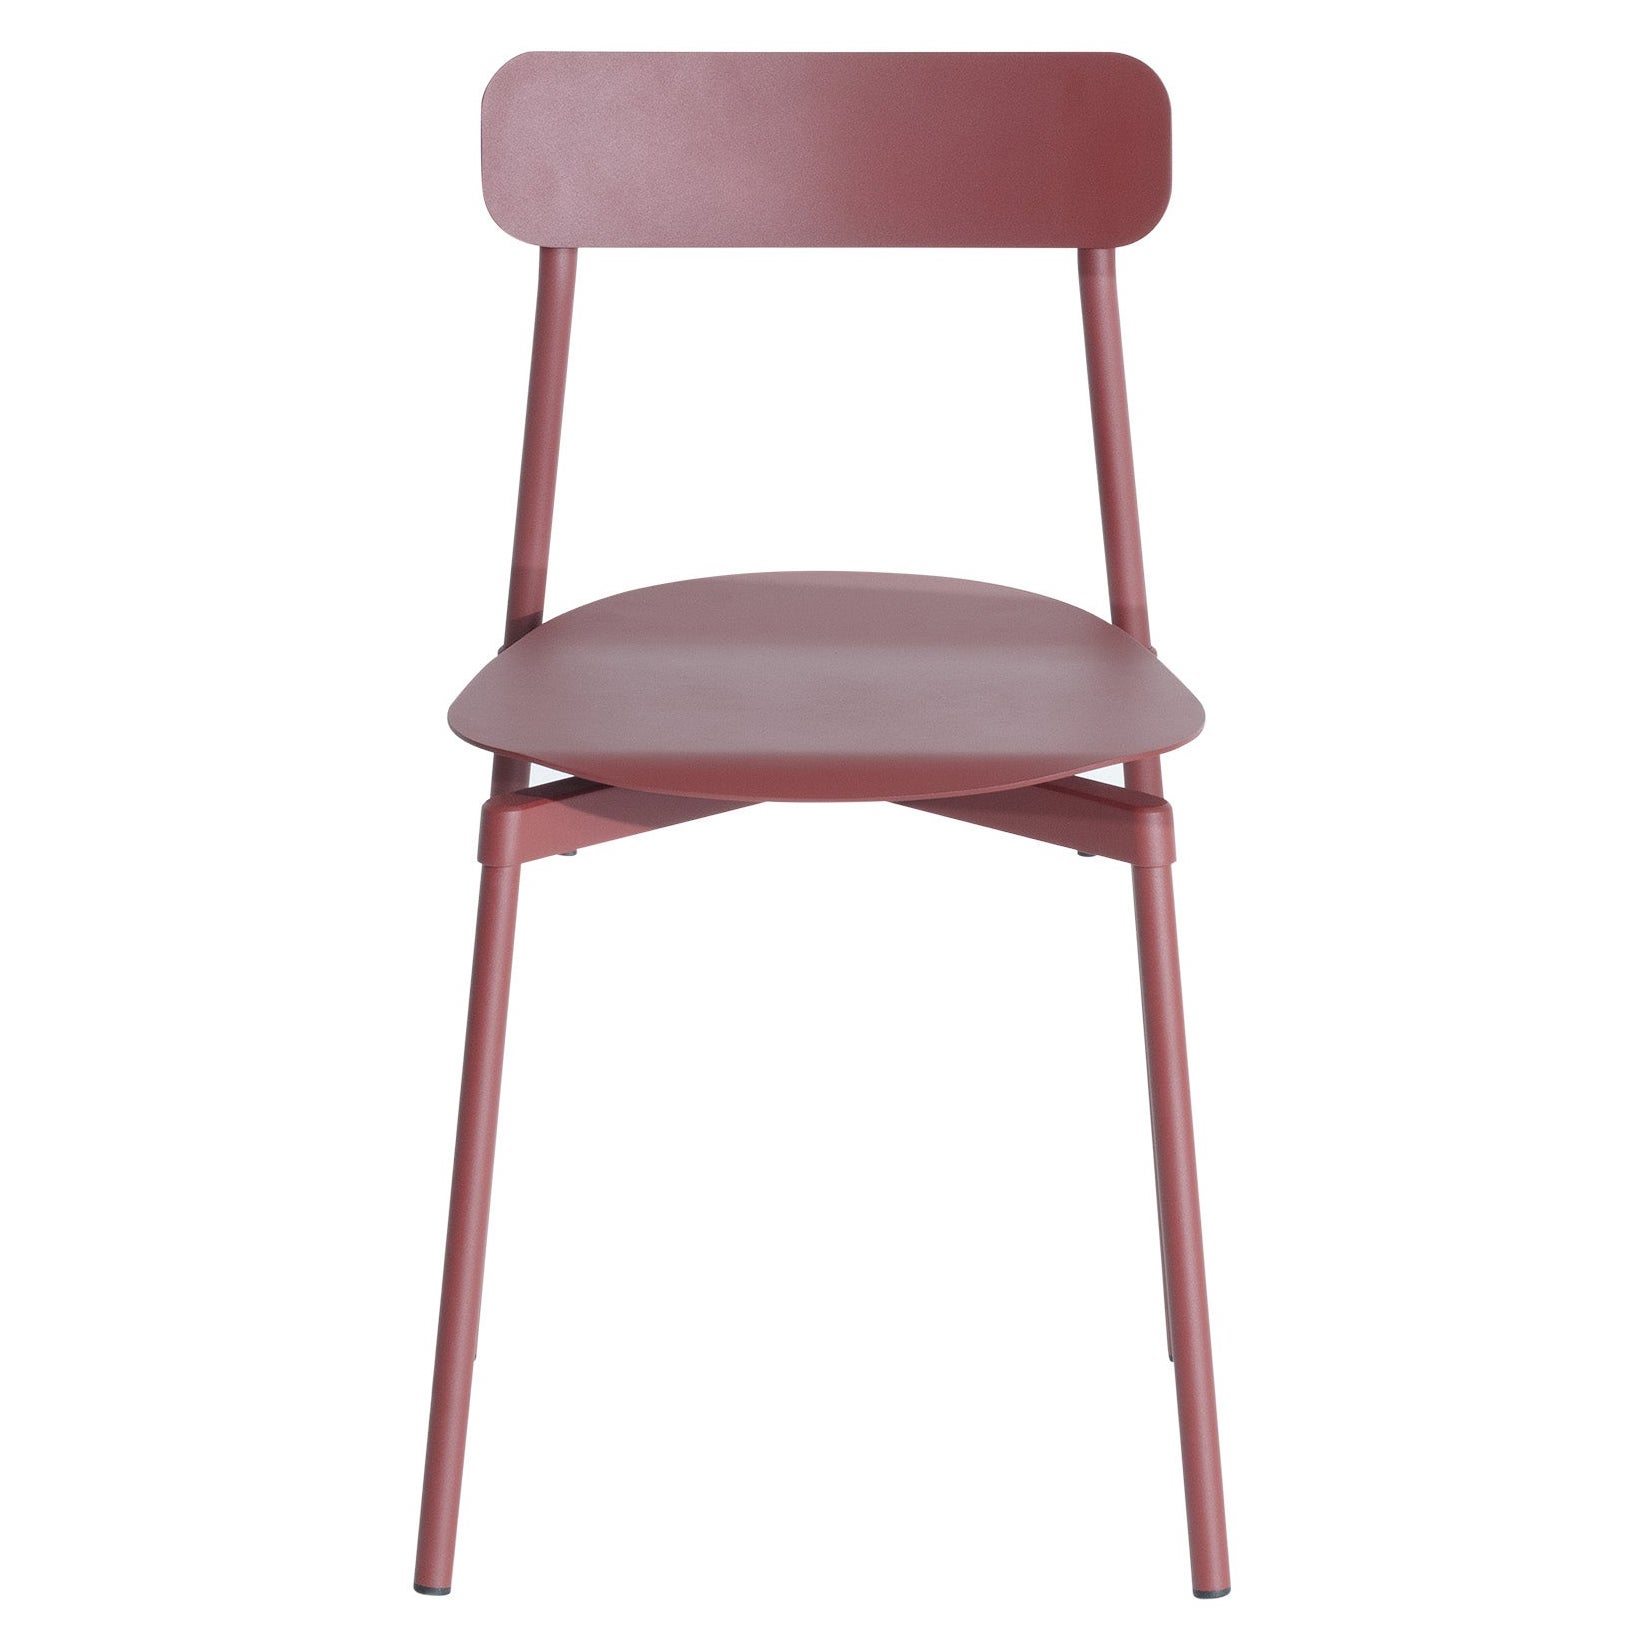 Petite chaise Friture Fromme en aluminium brun-rouge de Tom Chung, 2019